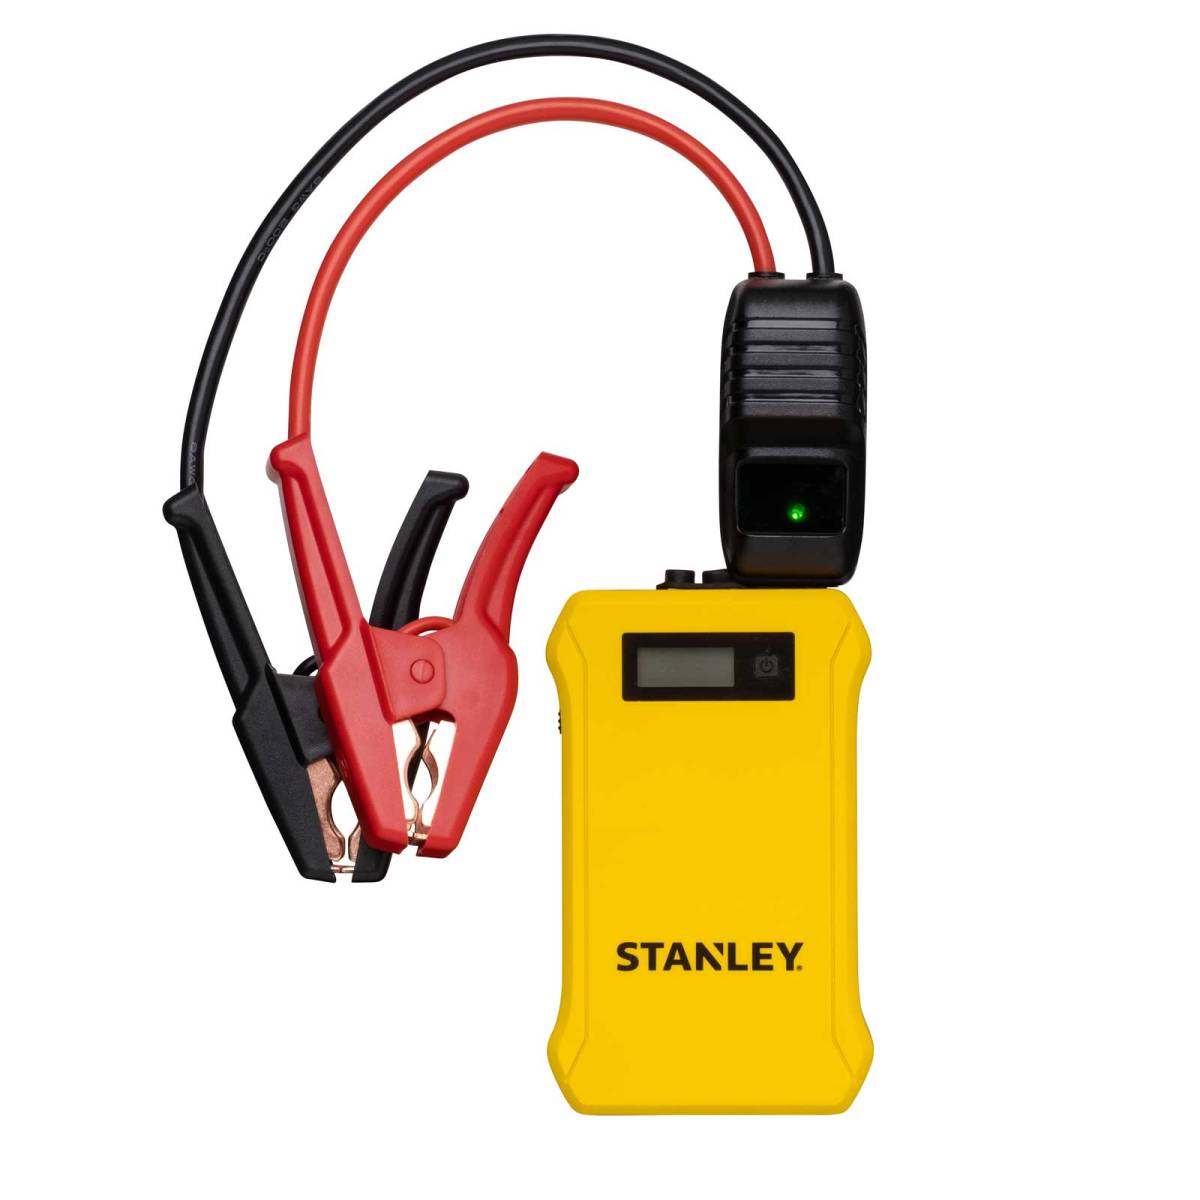 Stanley Booster Powerbank & Jump Starter 12V 700A 7200mAh